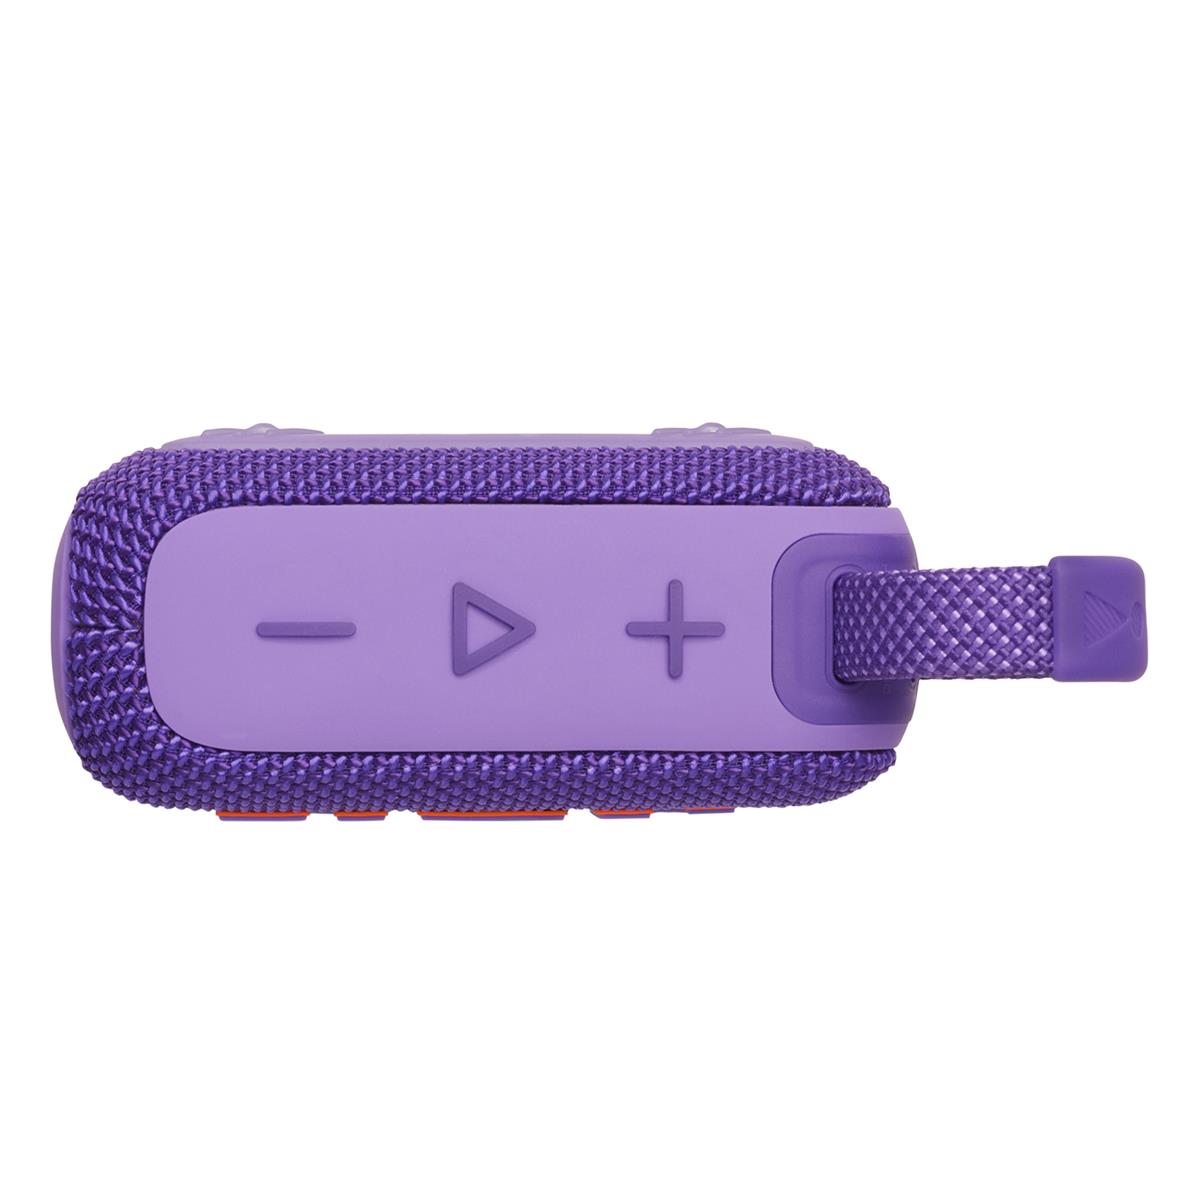 JBL Go 4 Portable Waterproof Bluetooth Speaker (Purple)